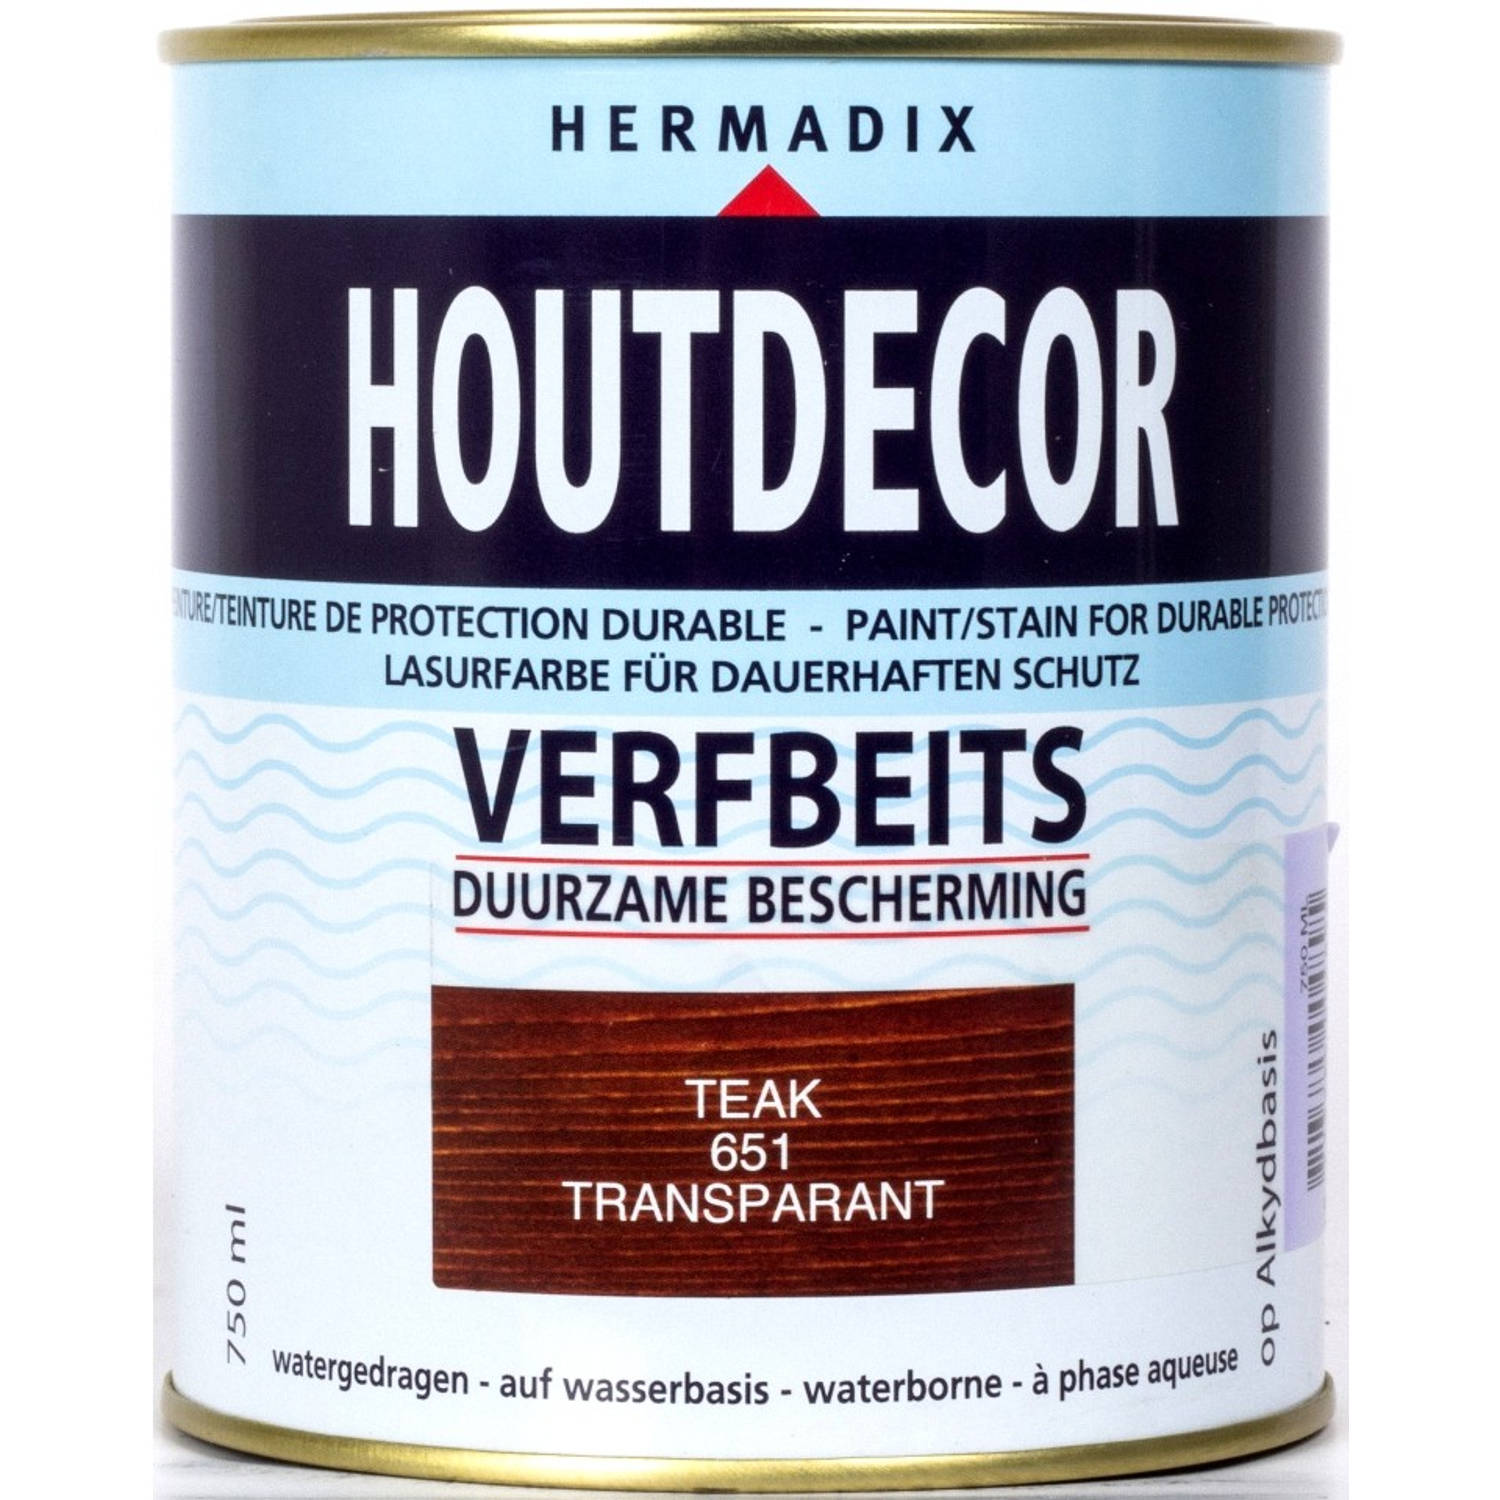 Hermadix houtdecor verfbeits teak 651 750 ml